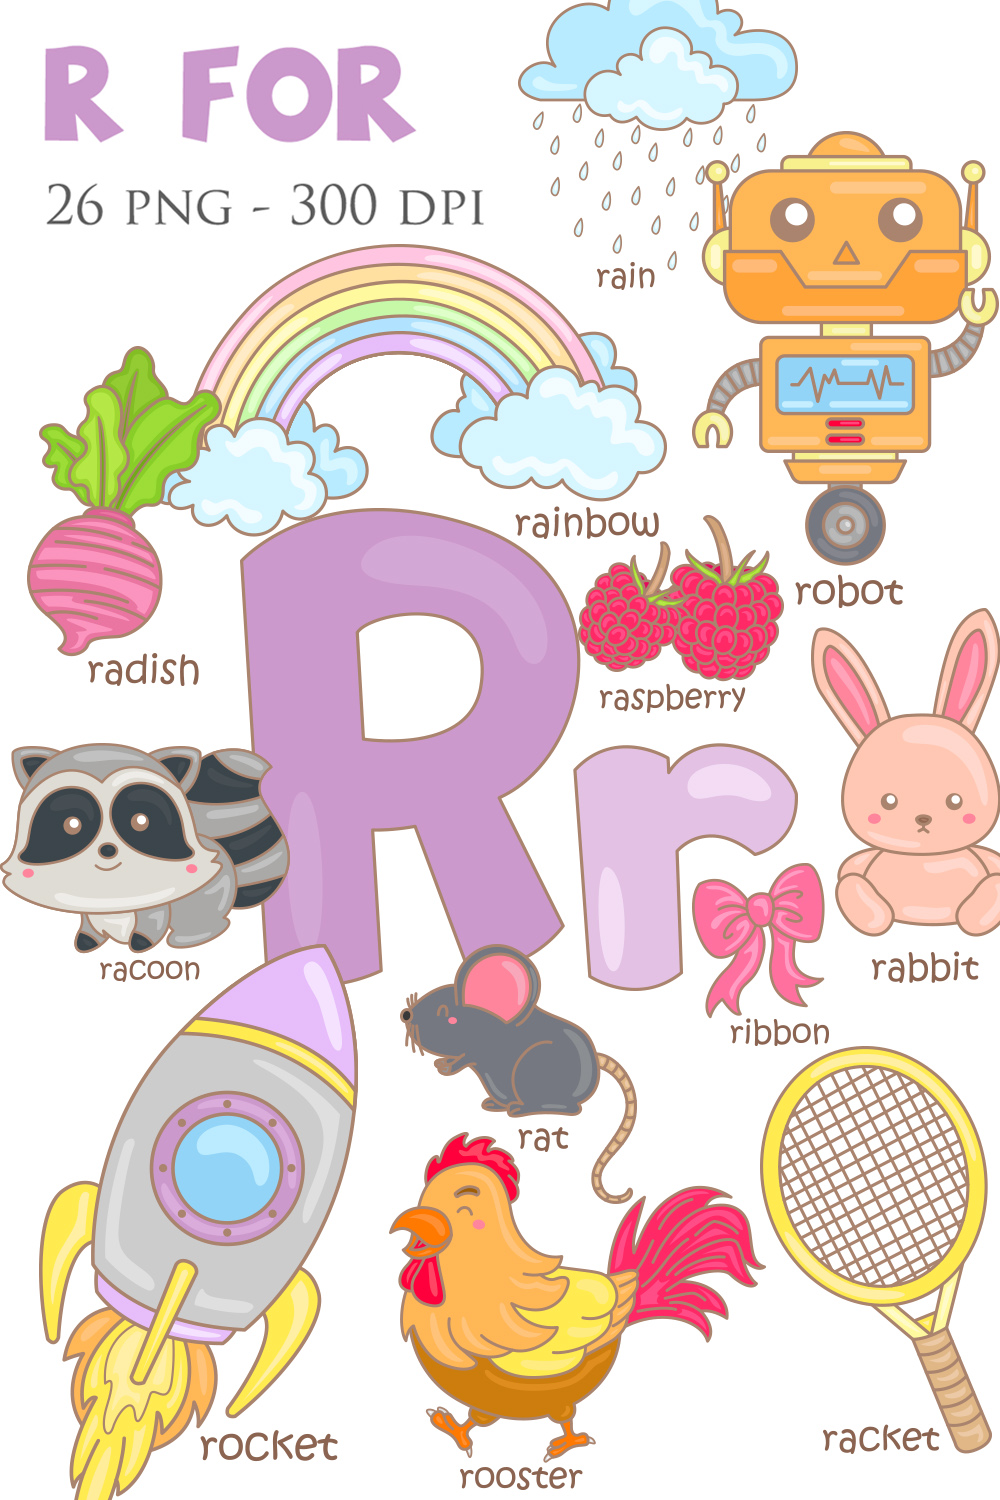 Alphabet R For Vocabulary School Lesson Rocket Robot Rat Rabbit Radish Ribbon Racoon Racket Rainbow Raspberry Rain Rooster Illustration Vector Clipart Cartoon pinterest preview image.